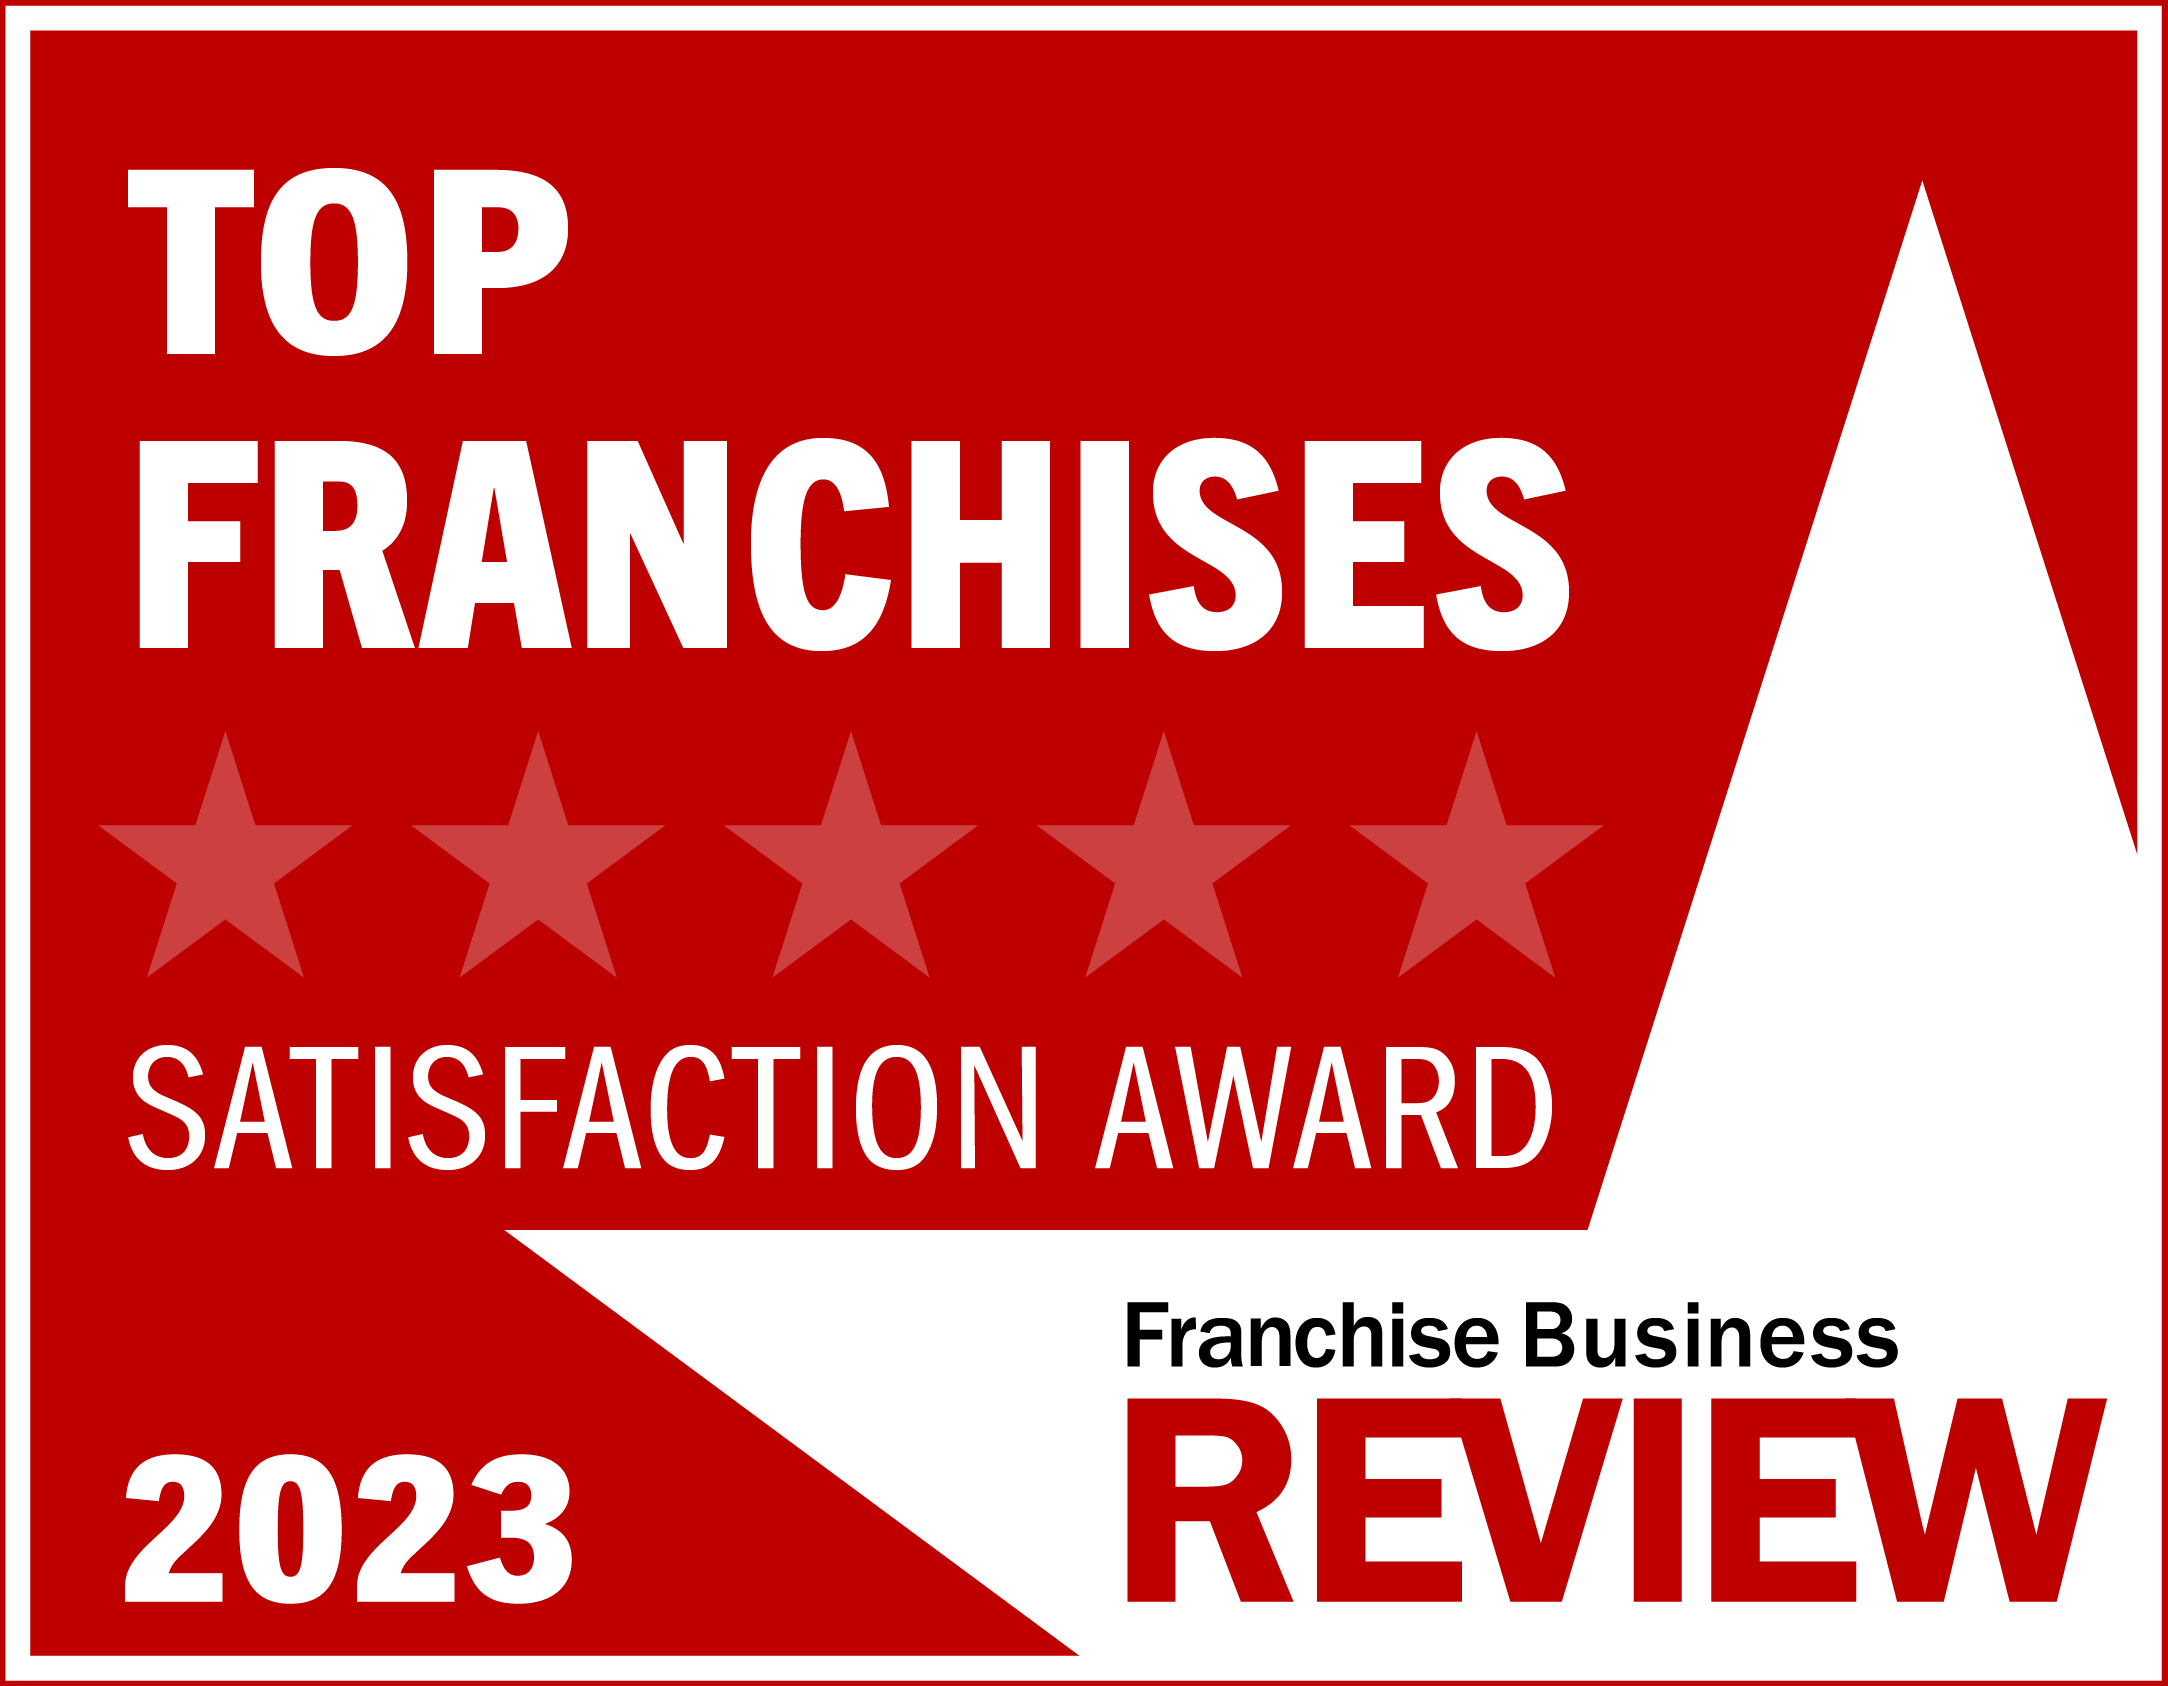 Franchise Business Review Top 50 2023 Award Winner